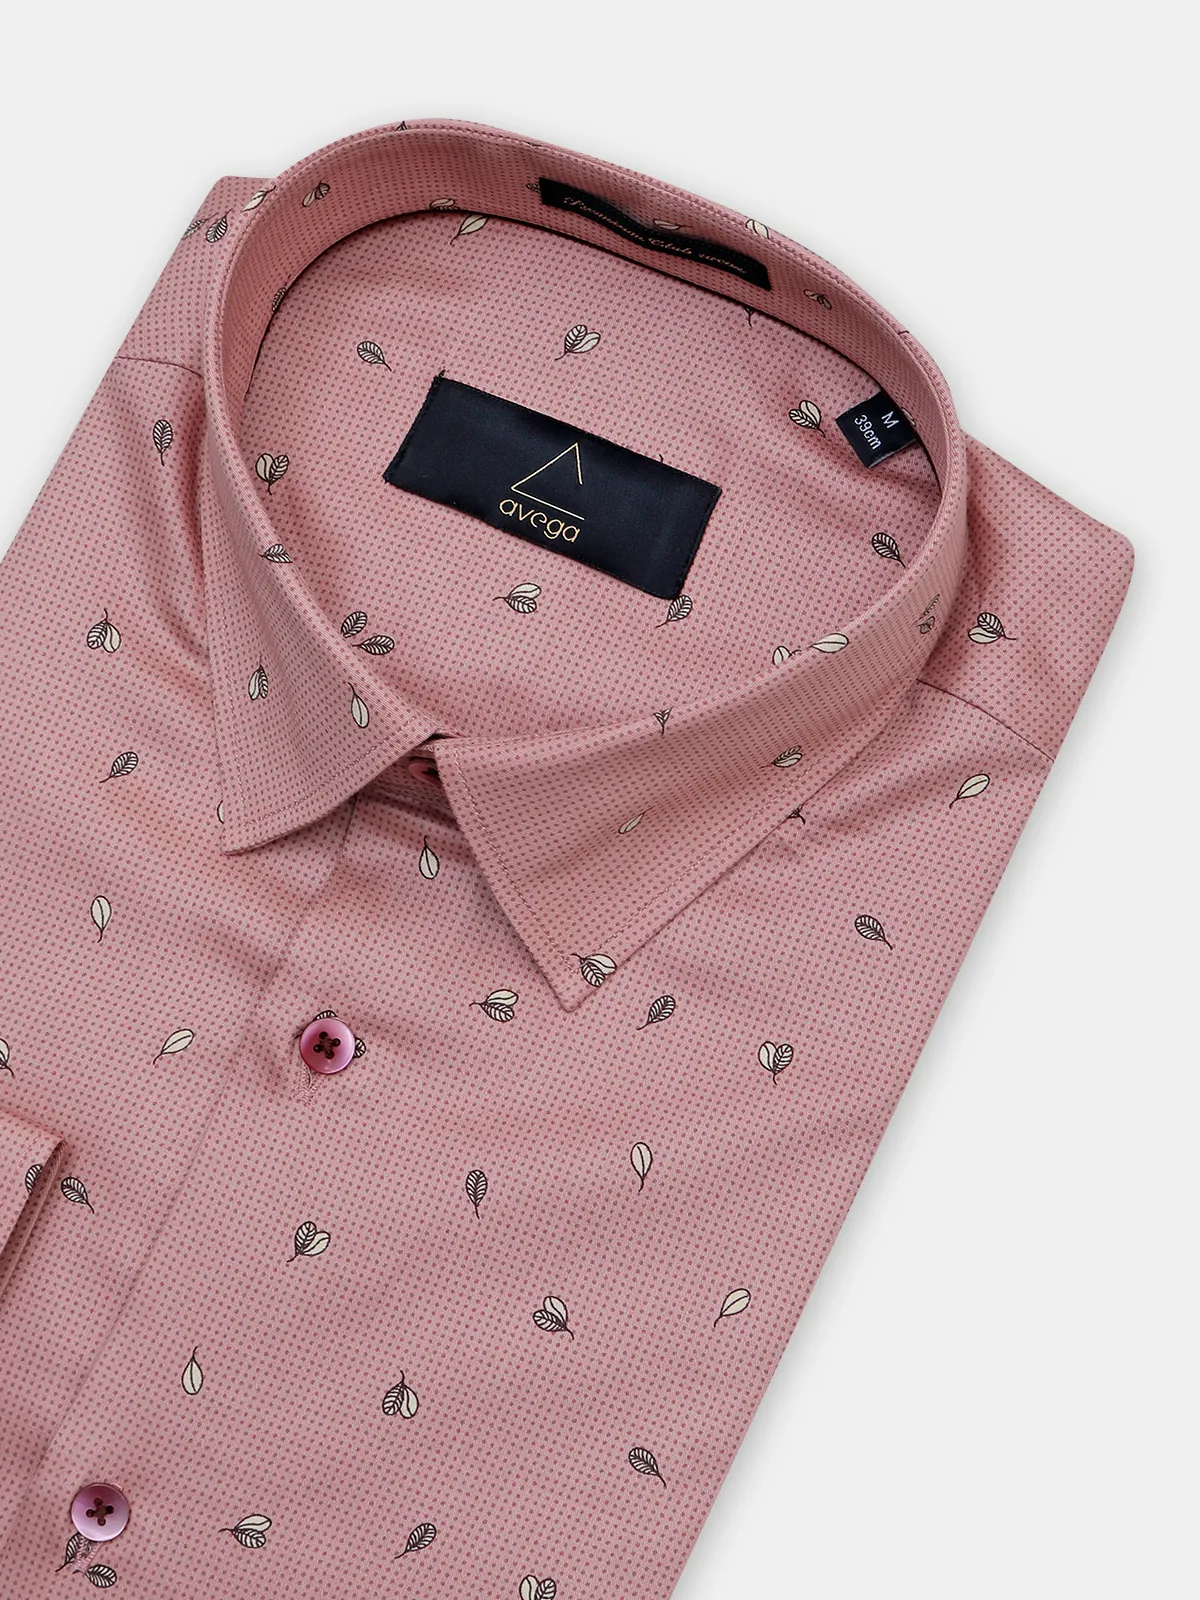 Avega onion pink slim fit cotton shirt